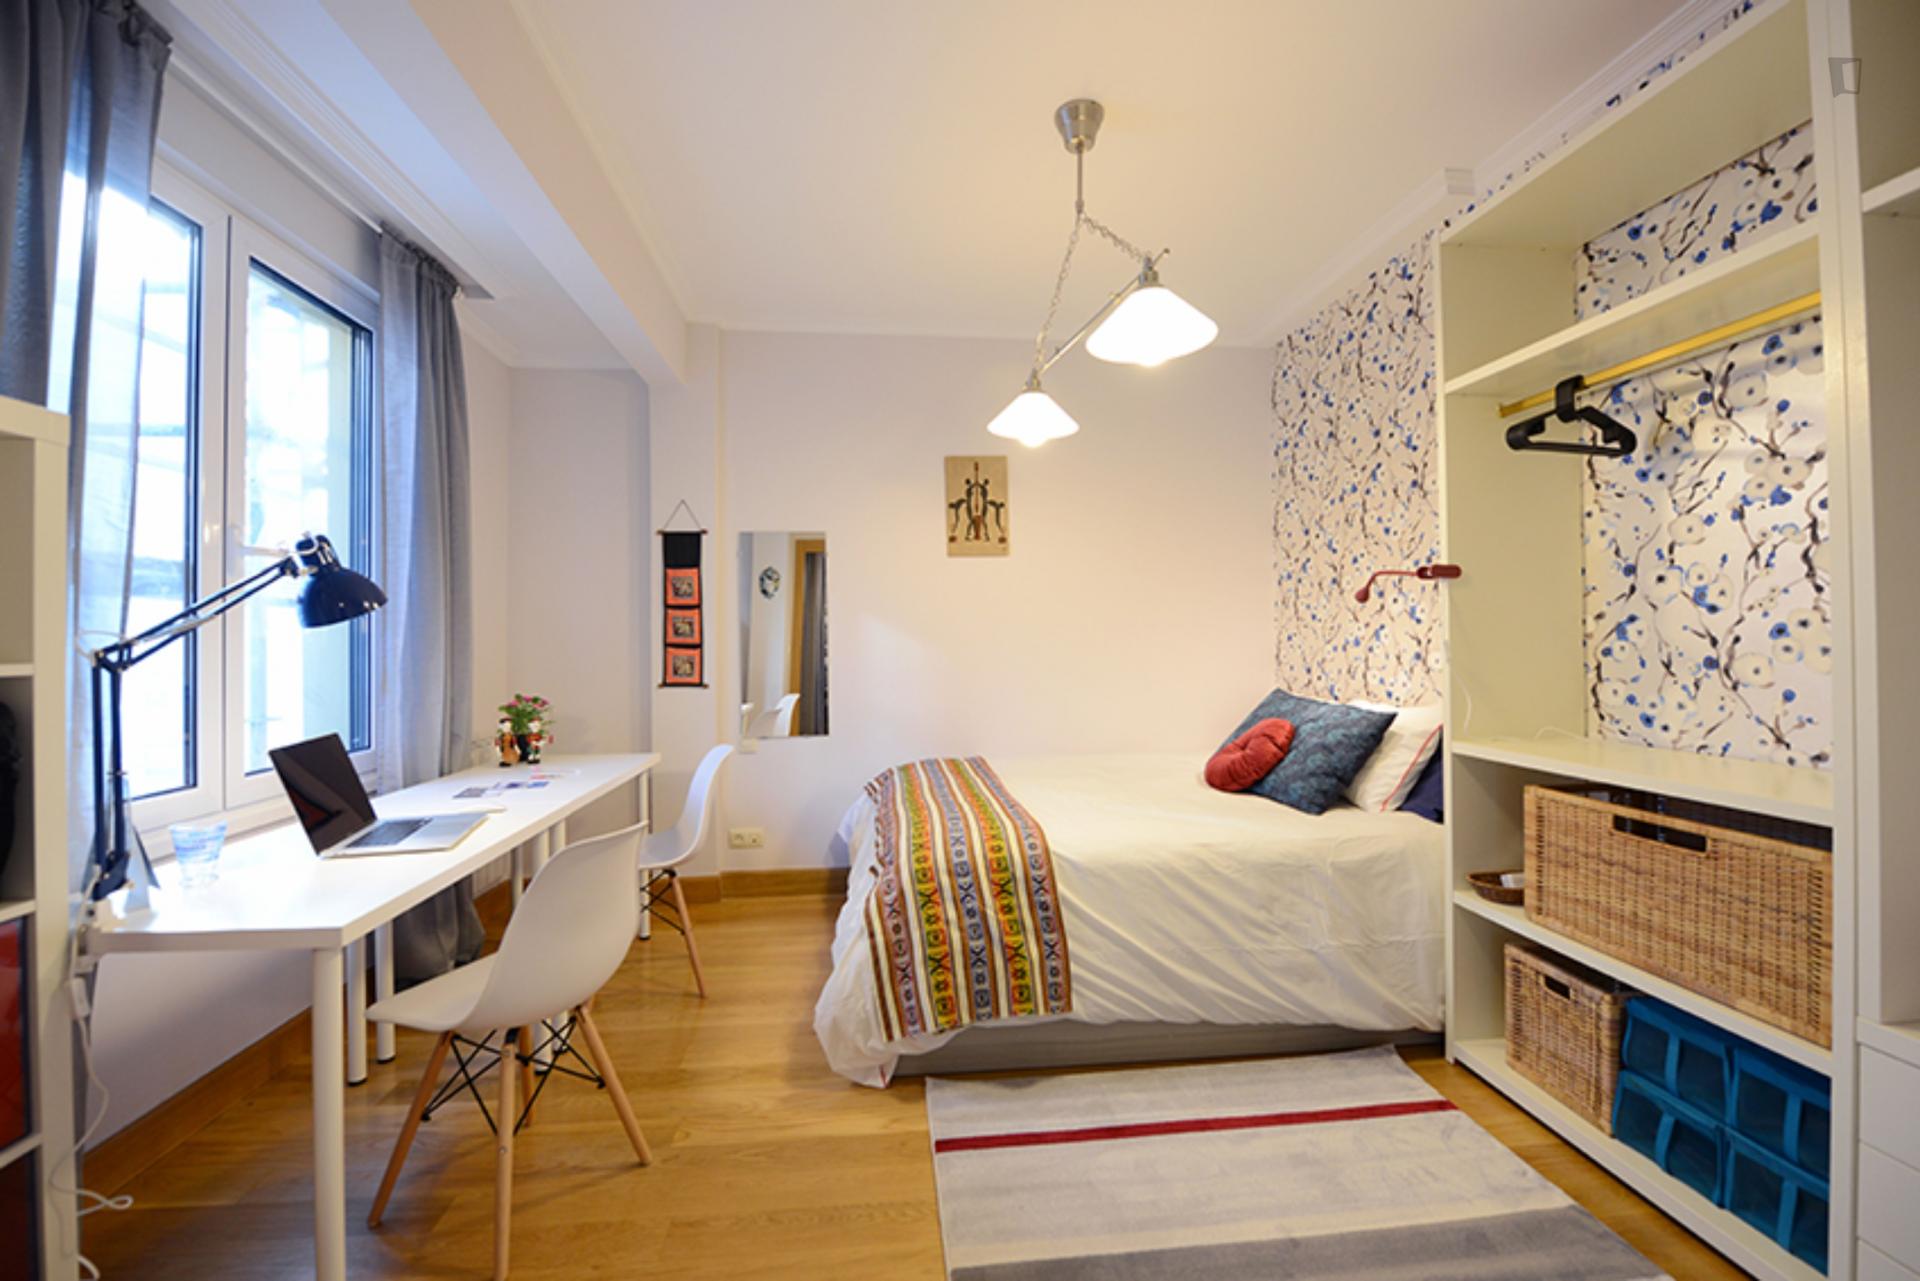 Kalea 2 - Furnished bedroom in Bilbao